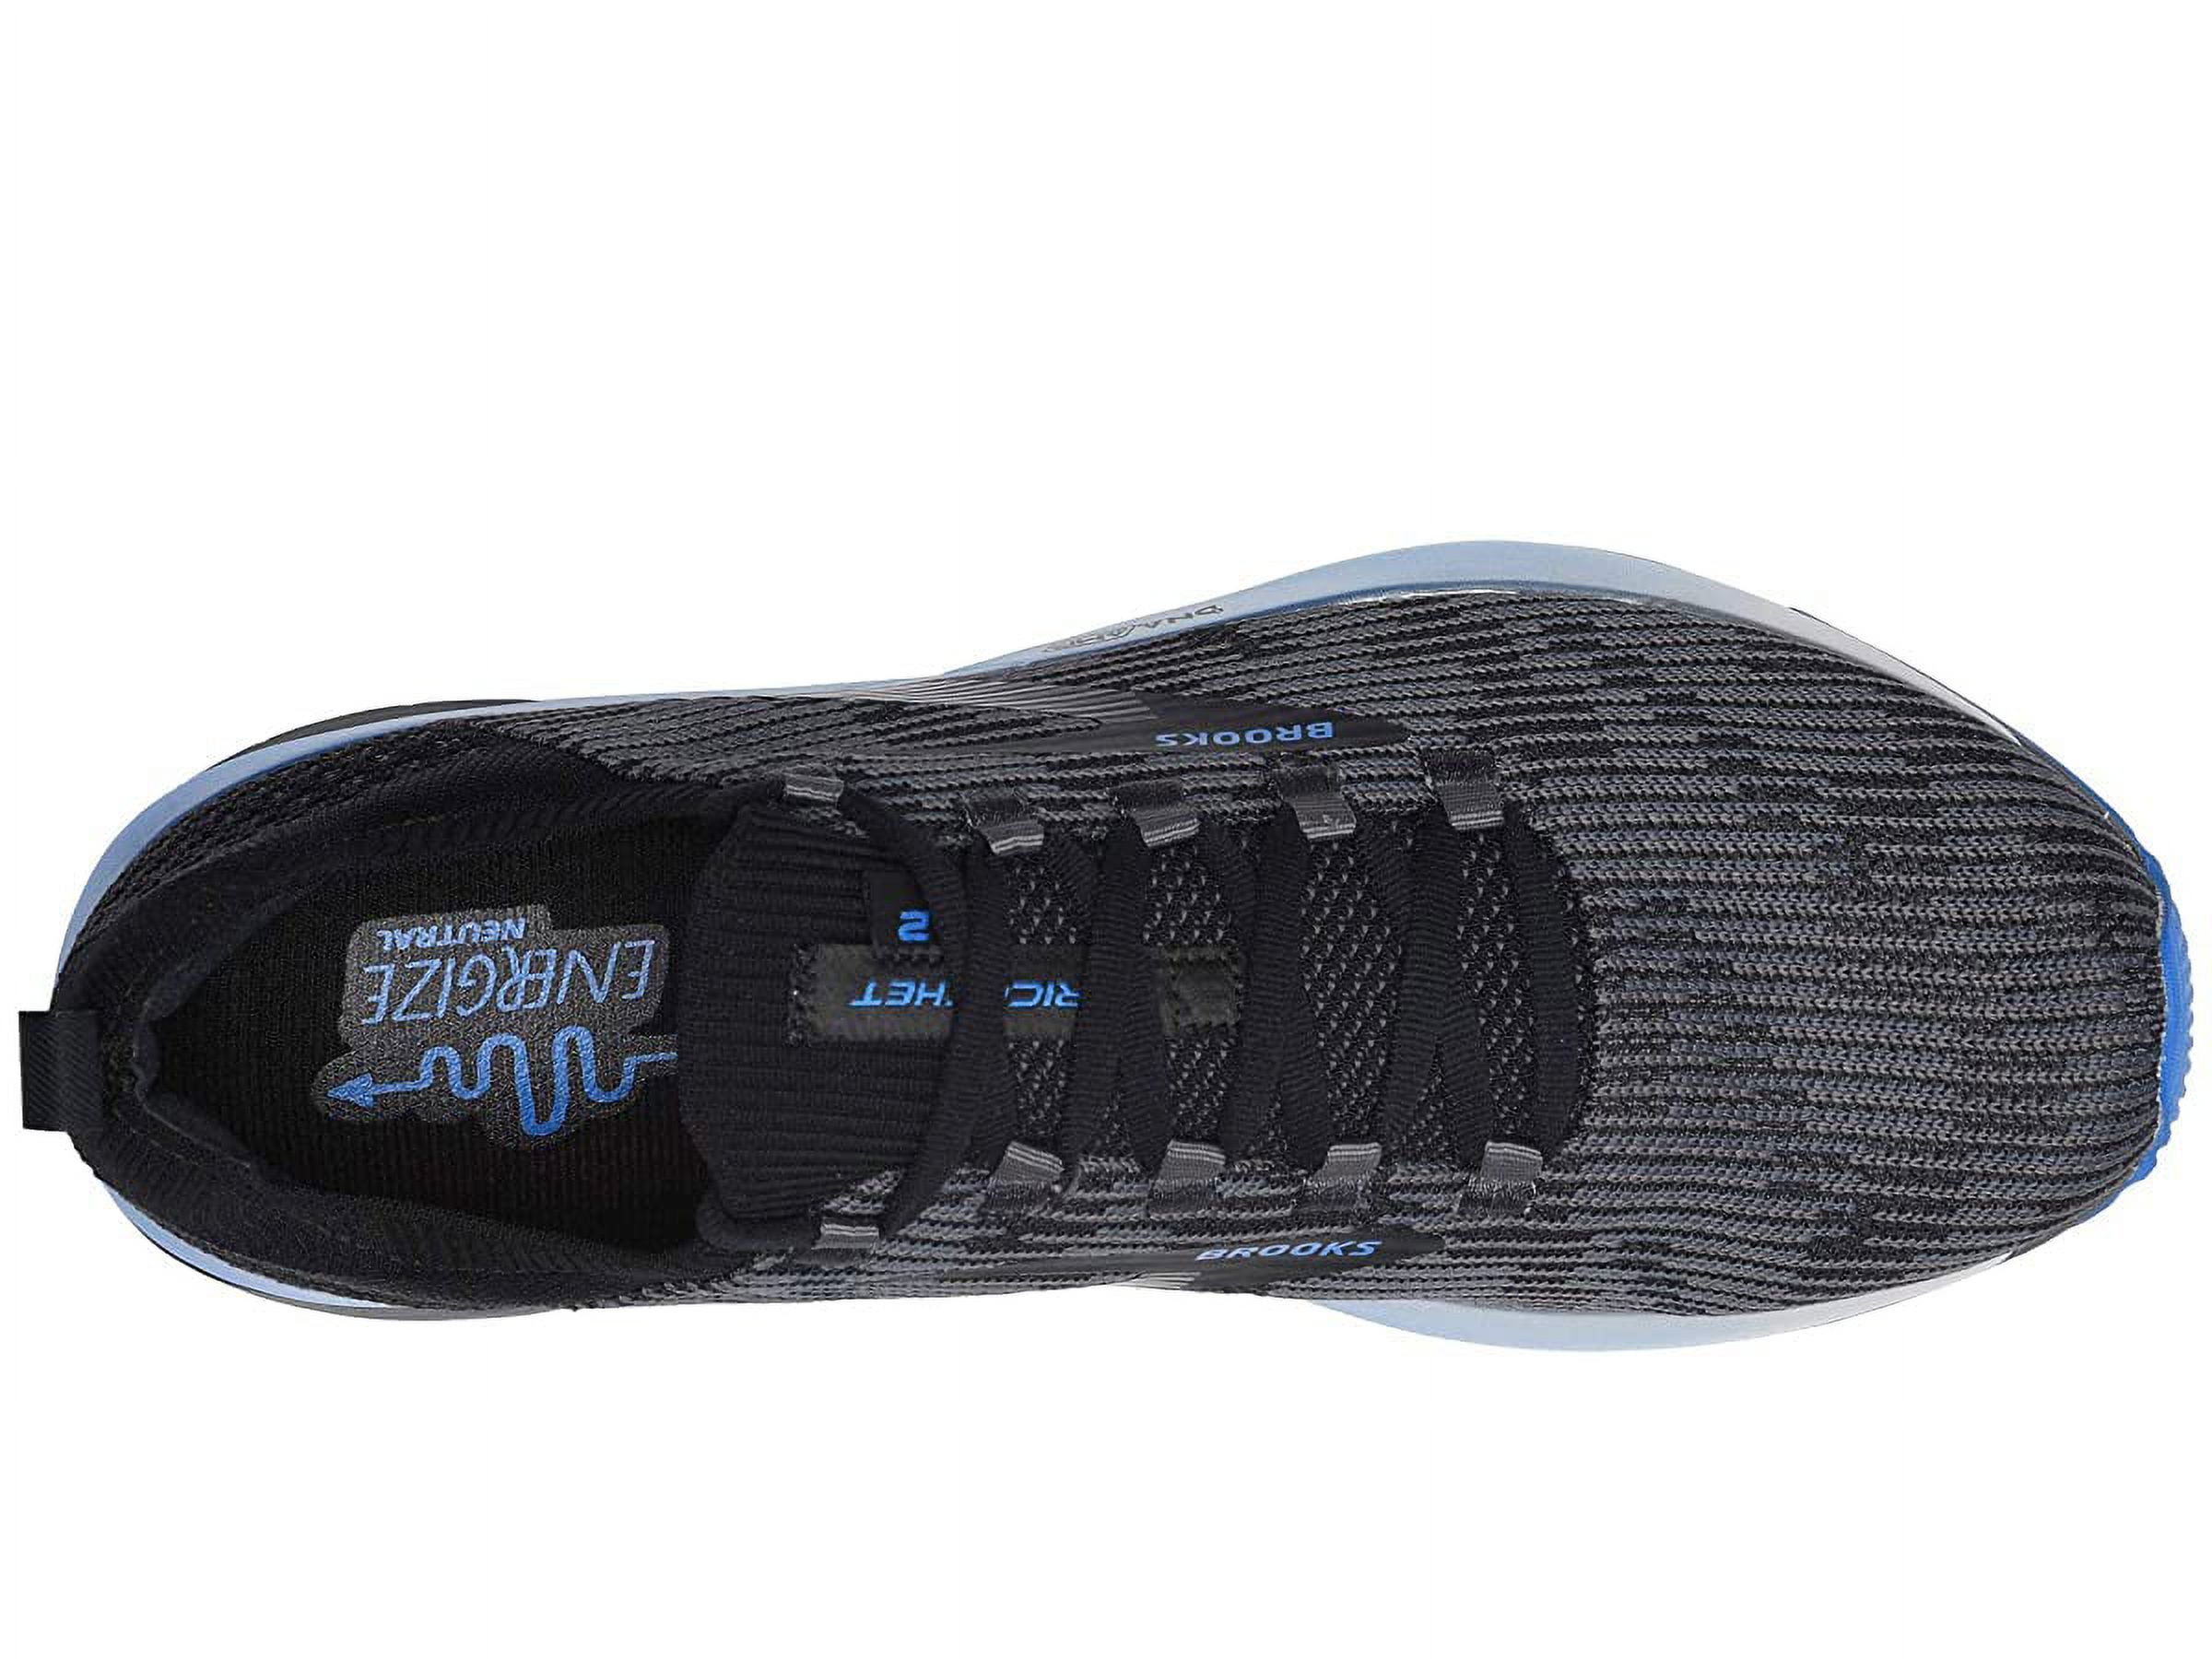 Brooks Men's Ricochet 2 Running Shoe, Black/Multi, 10.5 D(M) US - image 4 of 6